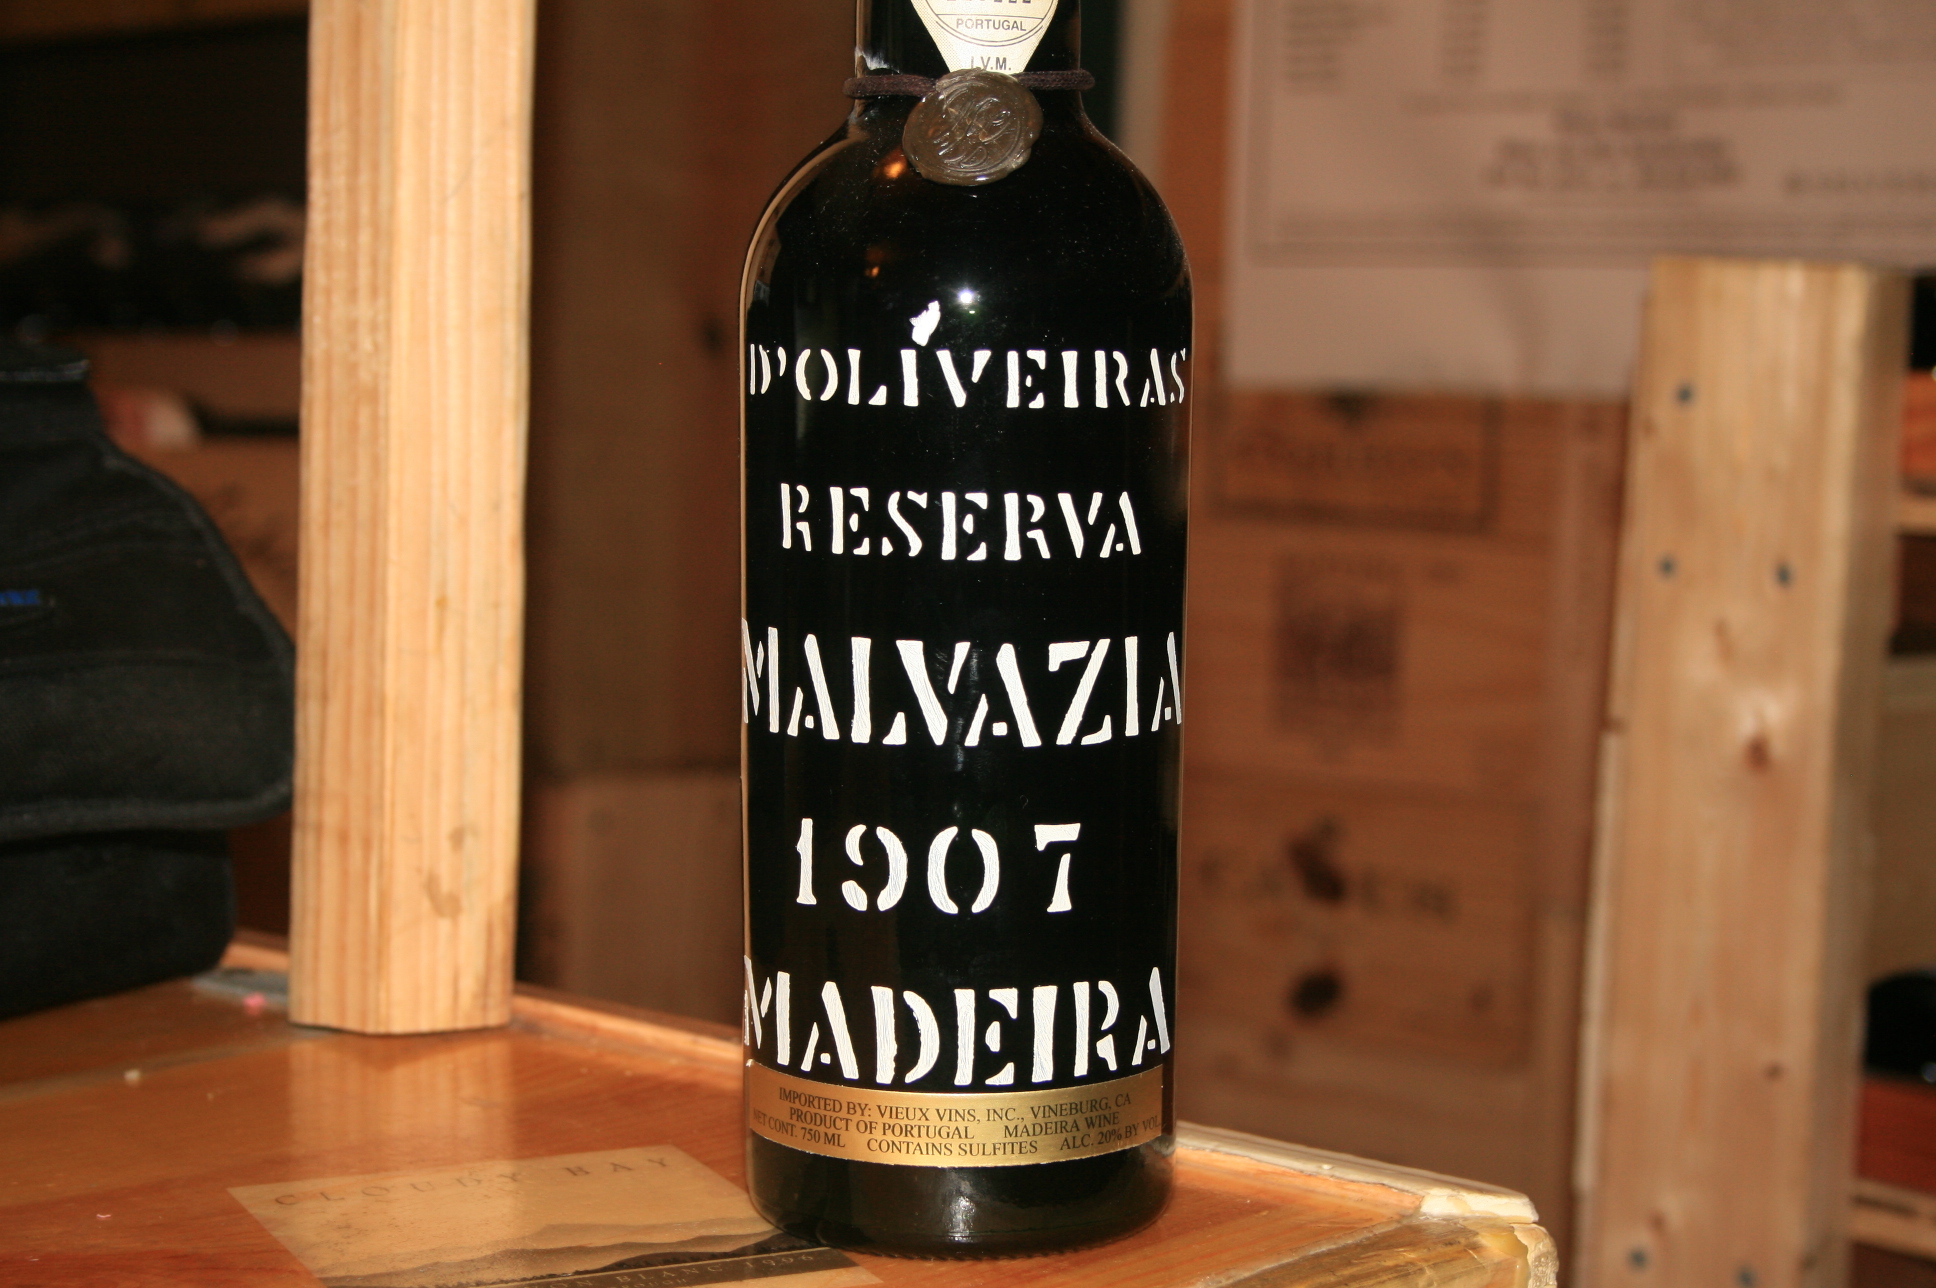 1907 D'Oliveiras Malvazia Vintage Madeira - click image for full description